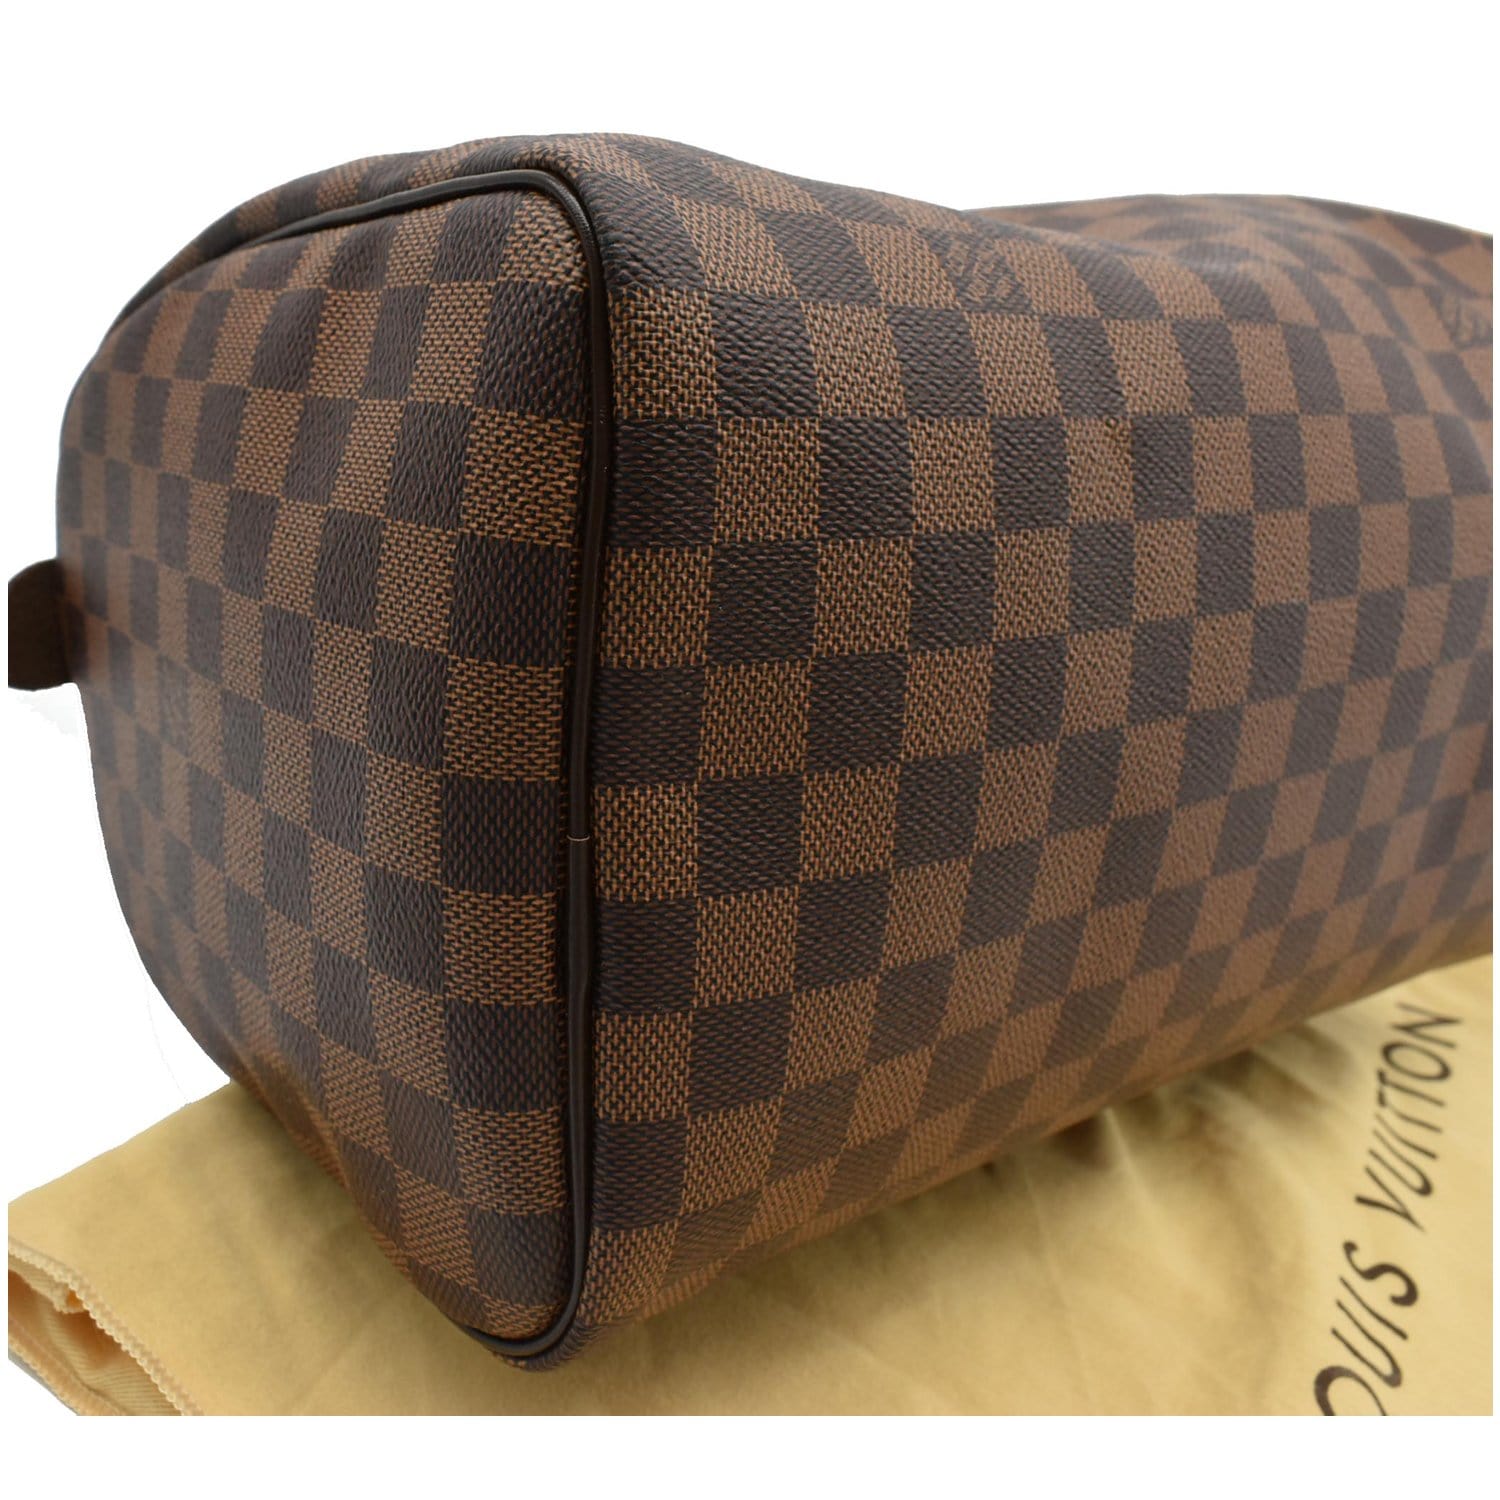 Louis Vuitton Speedy 30 Damier Ebene Canvas Handbag